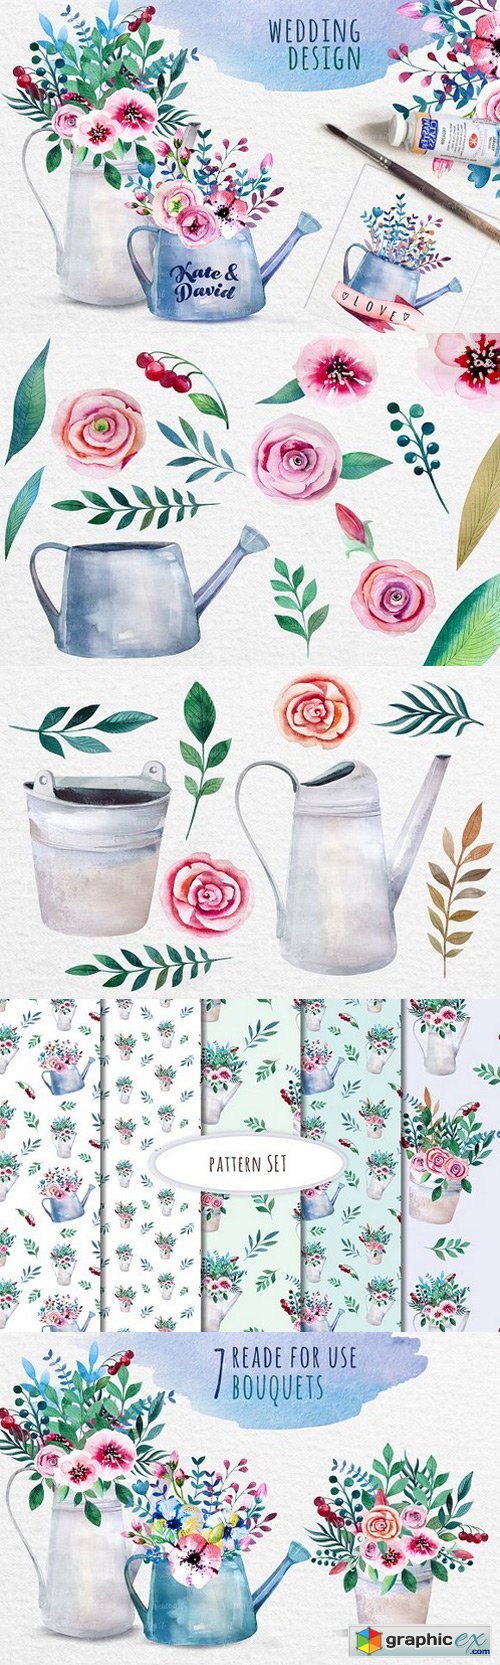 Watercolour bouquets in the pots